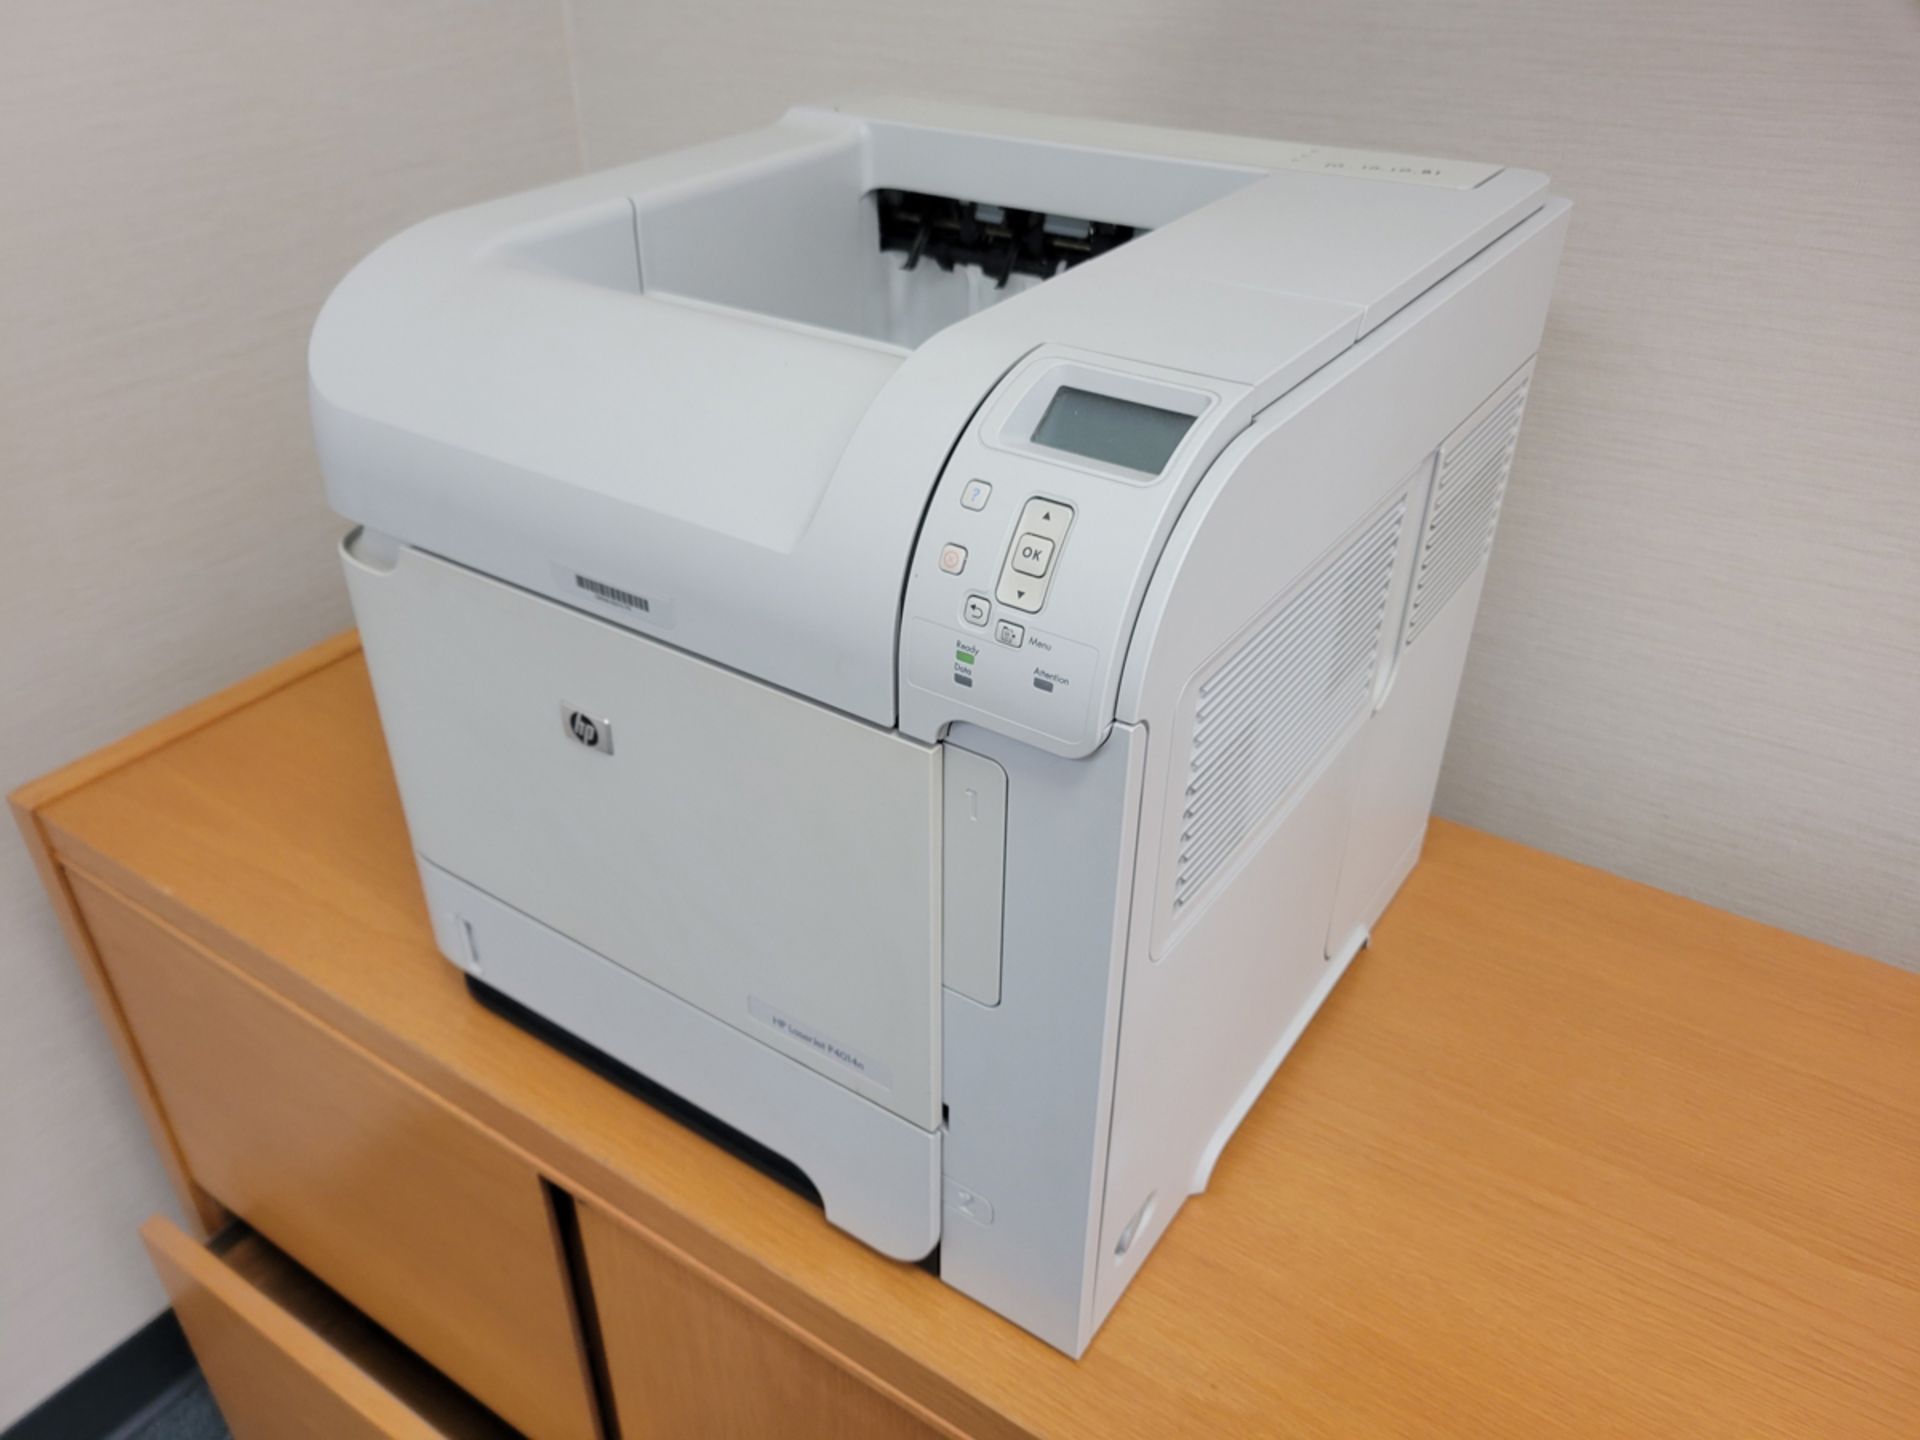 HP LaserJet P4014n Printer